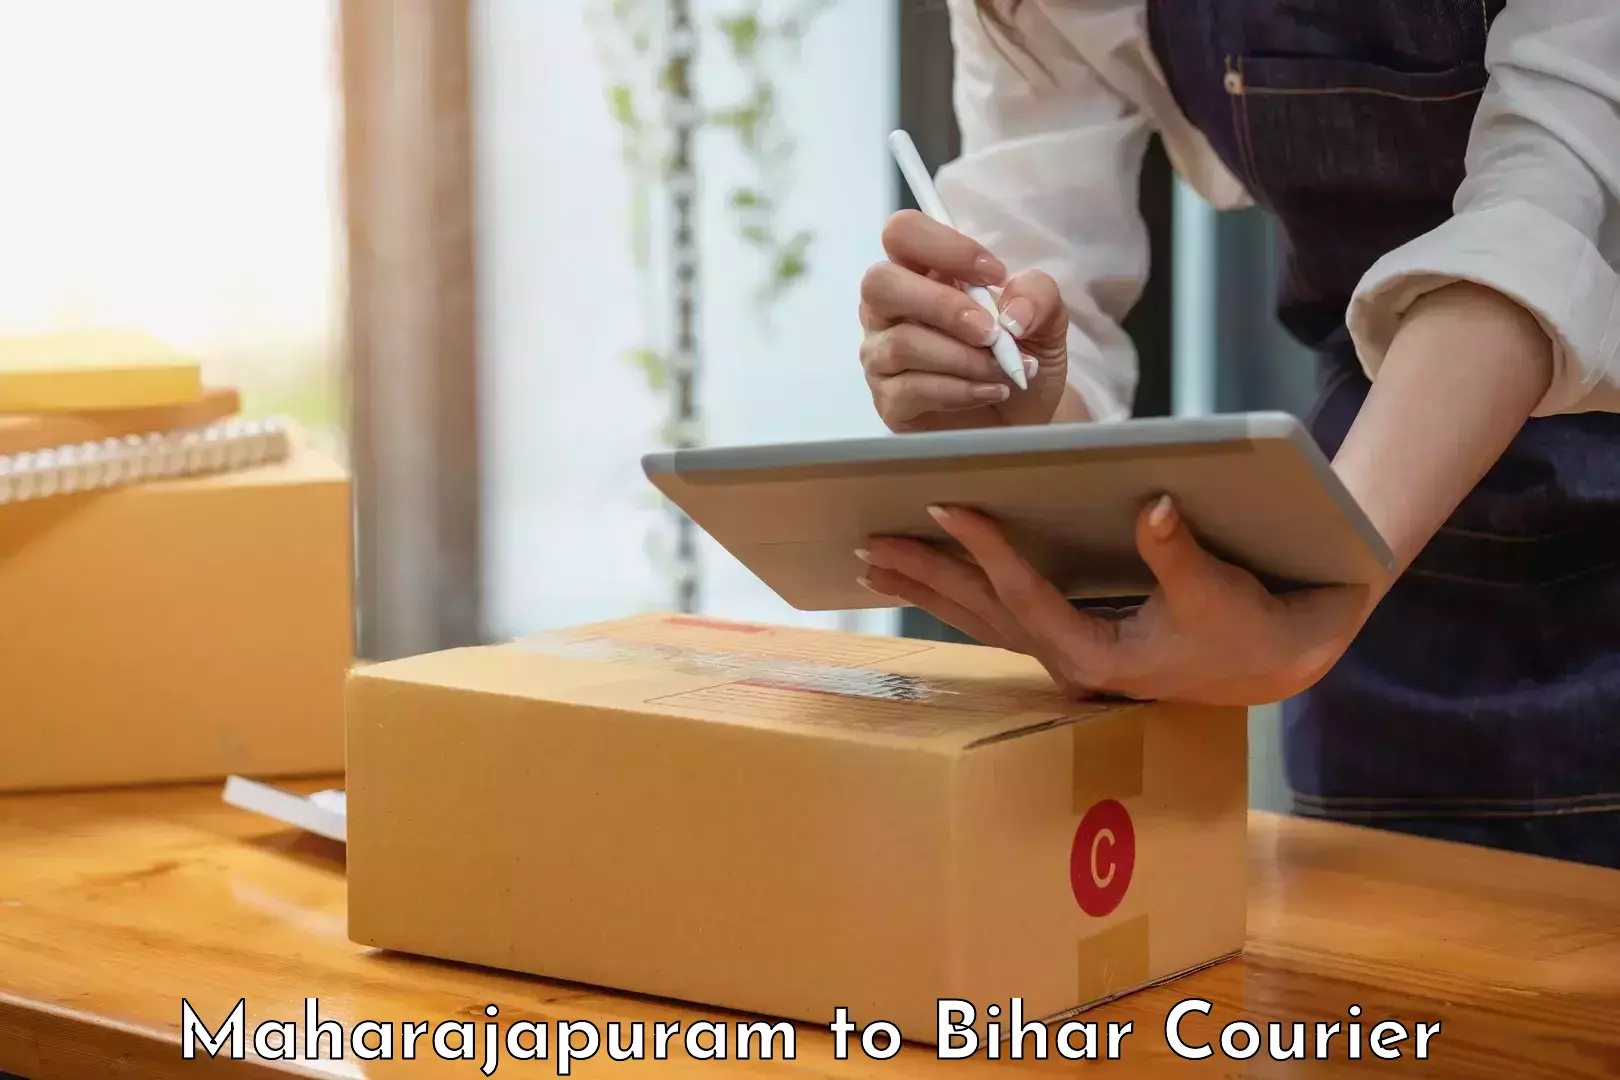 Global courier networks Maharajapuram to Aurangabad Bihar